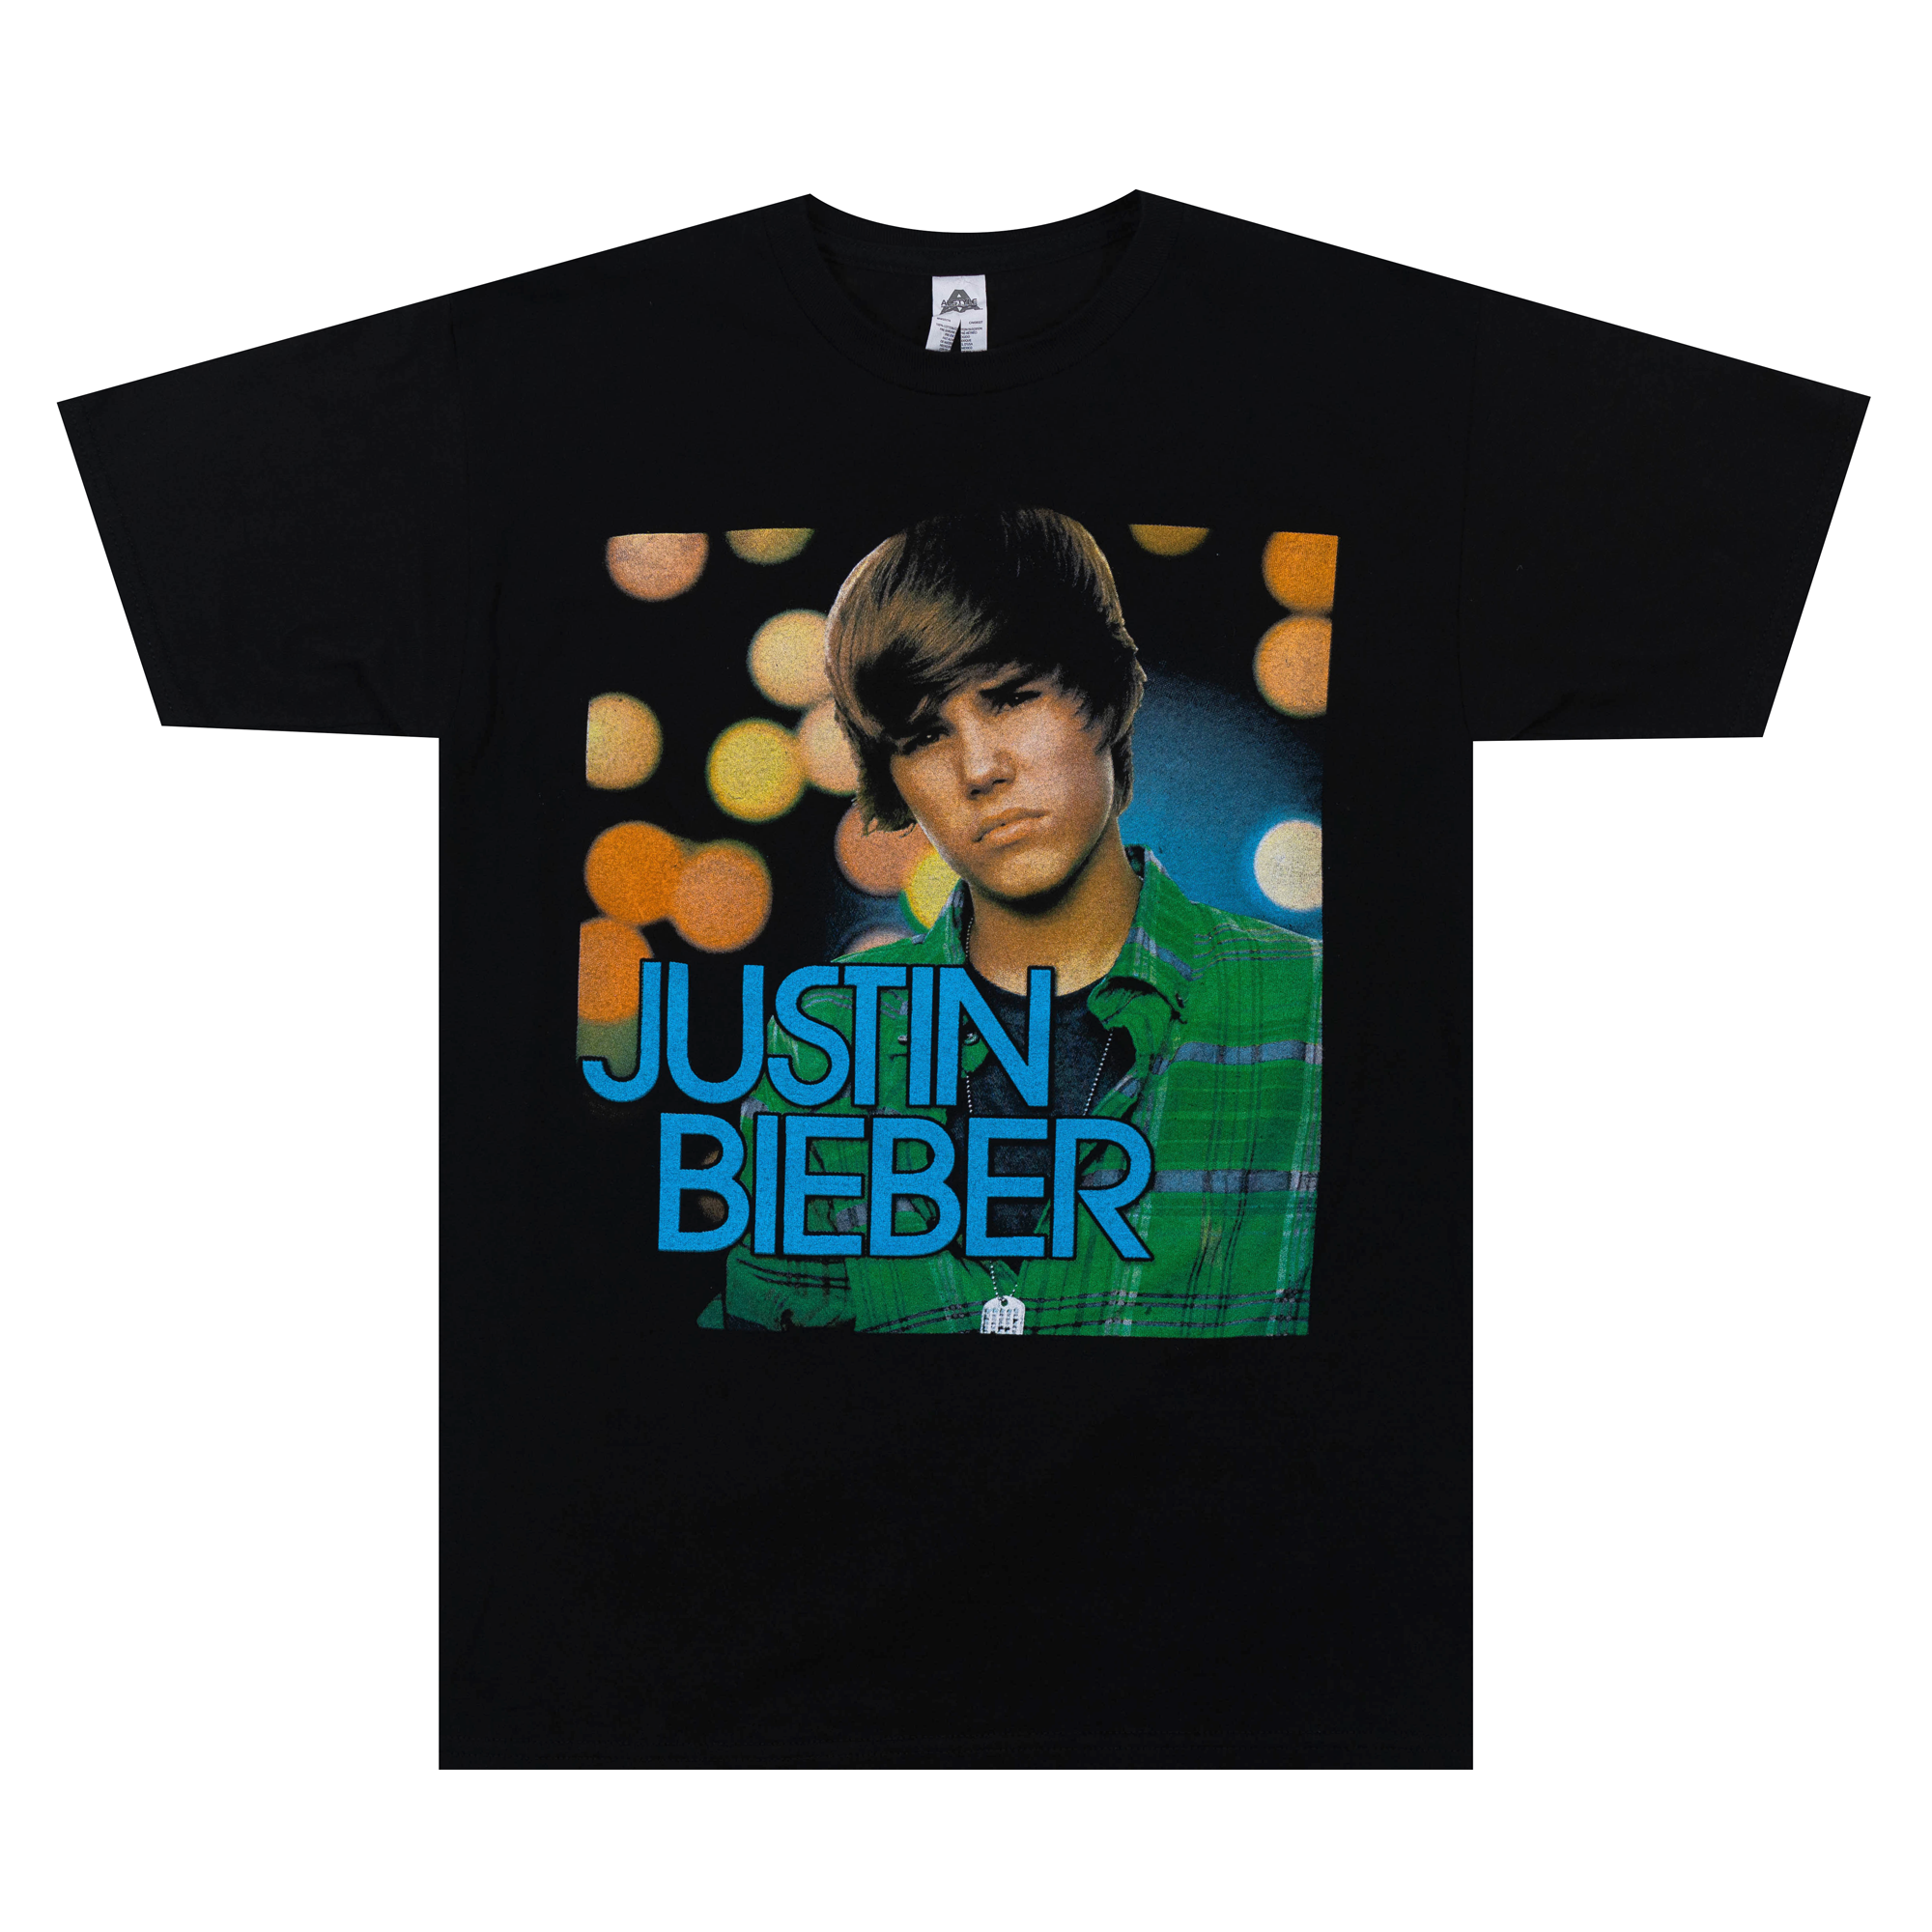 Justin Bieber Tour Merchandise Tee Black-PLUS